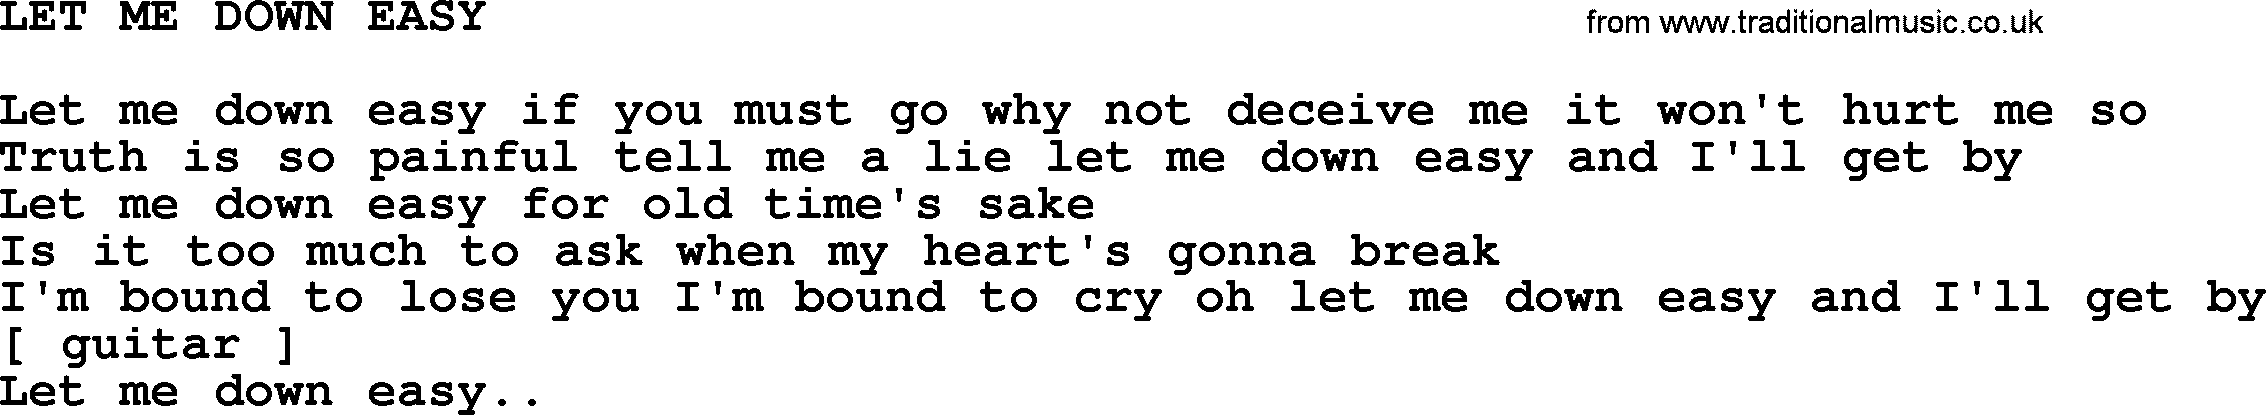 Johnny Cash song Let Me Down Easy.txt lyrics